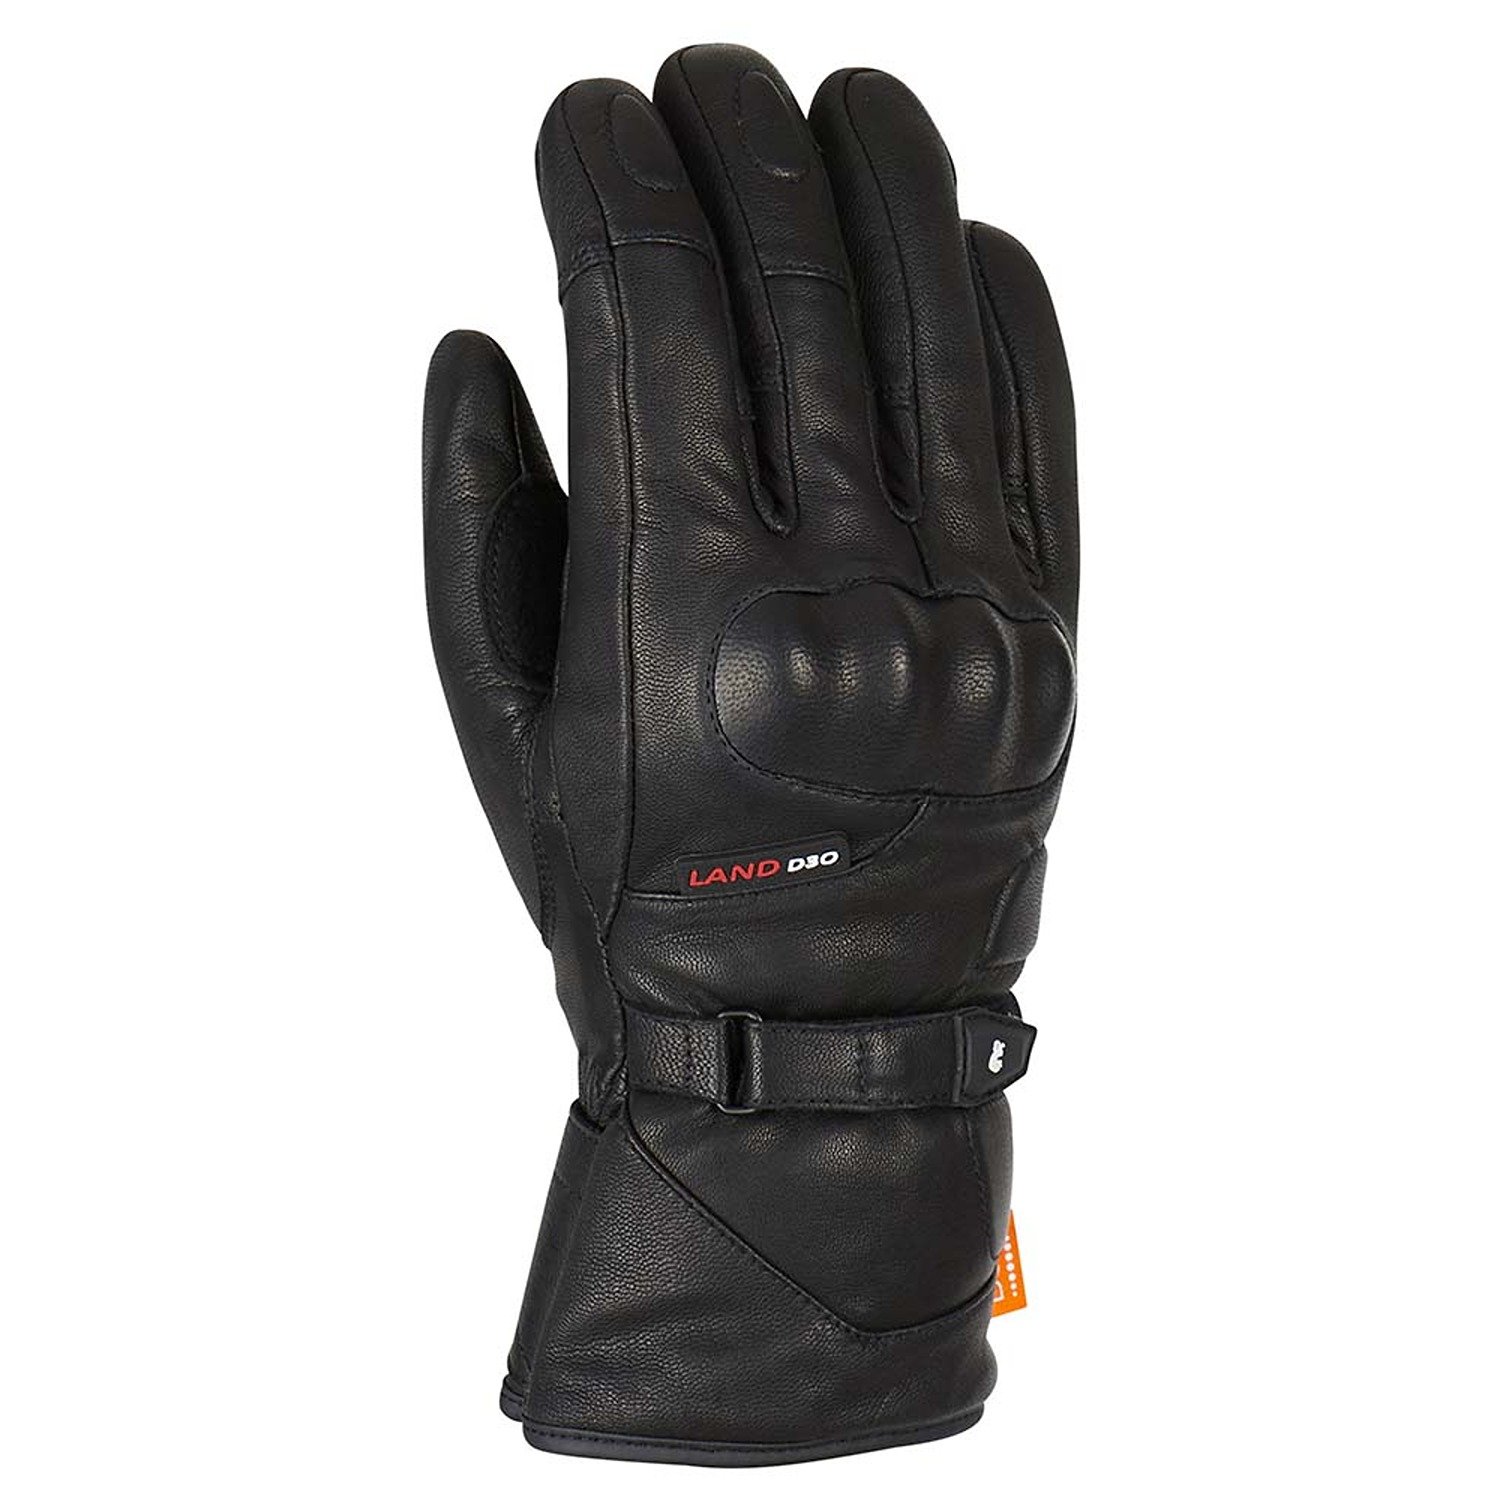 Image of Furygan Land DK D30 Gloves Black Größe XL